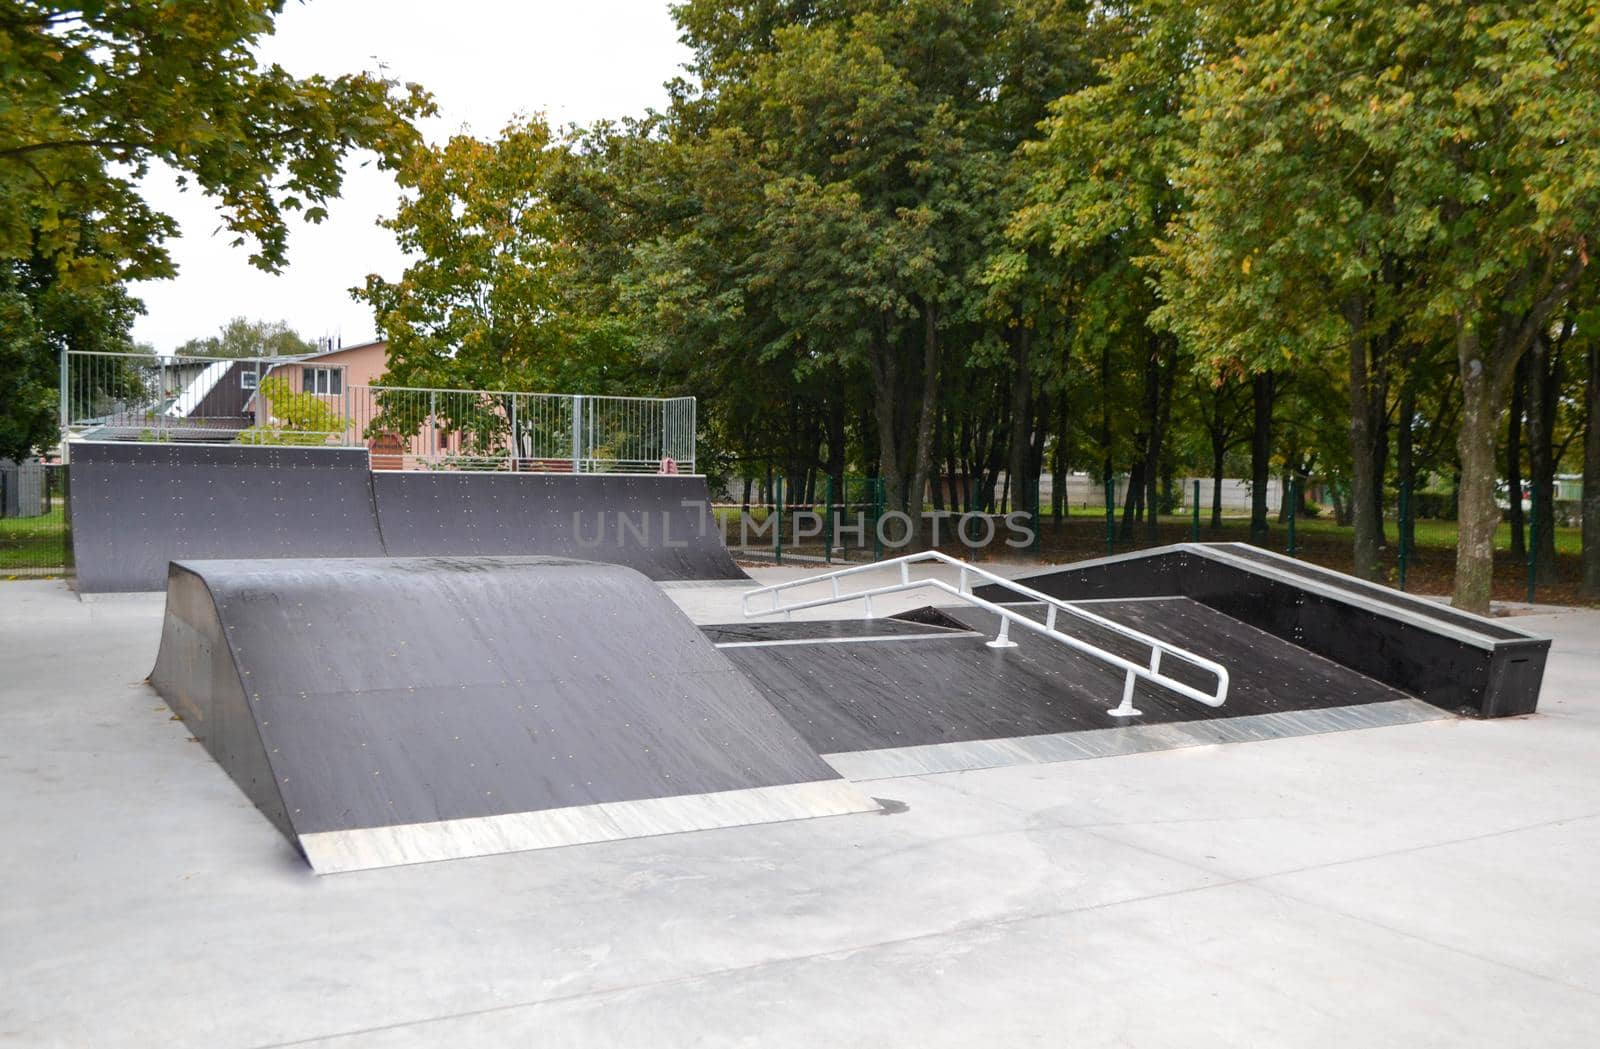 skatepark ramps in the park on autumn by milastokerpro